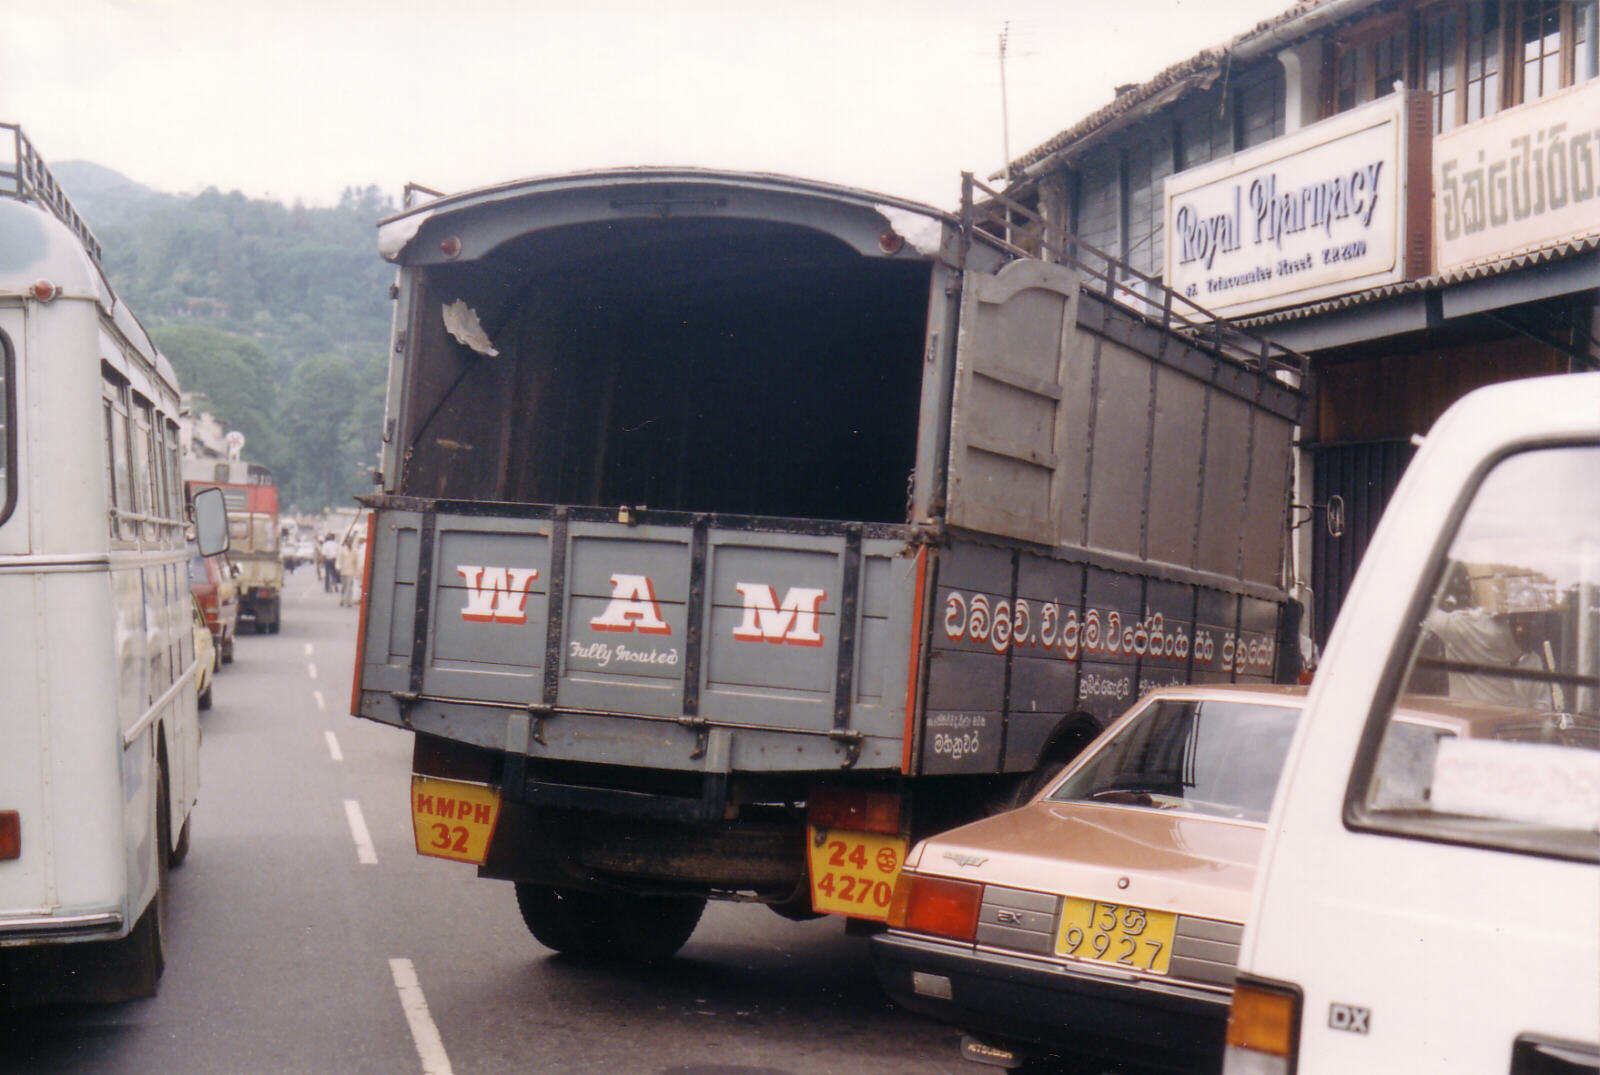 Fully insured? An optimistic lorry in Kandy, Sri Lanka